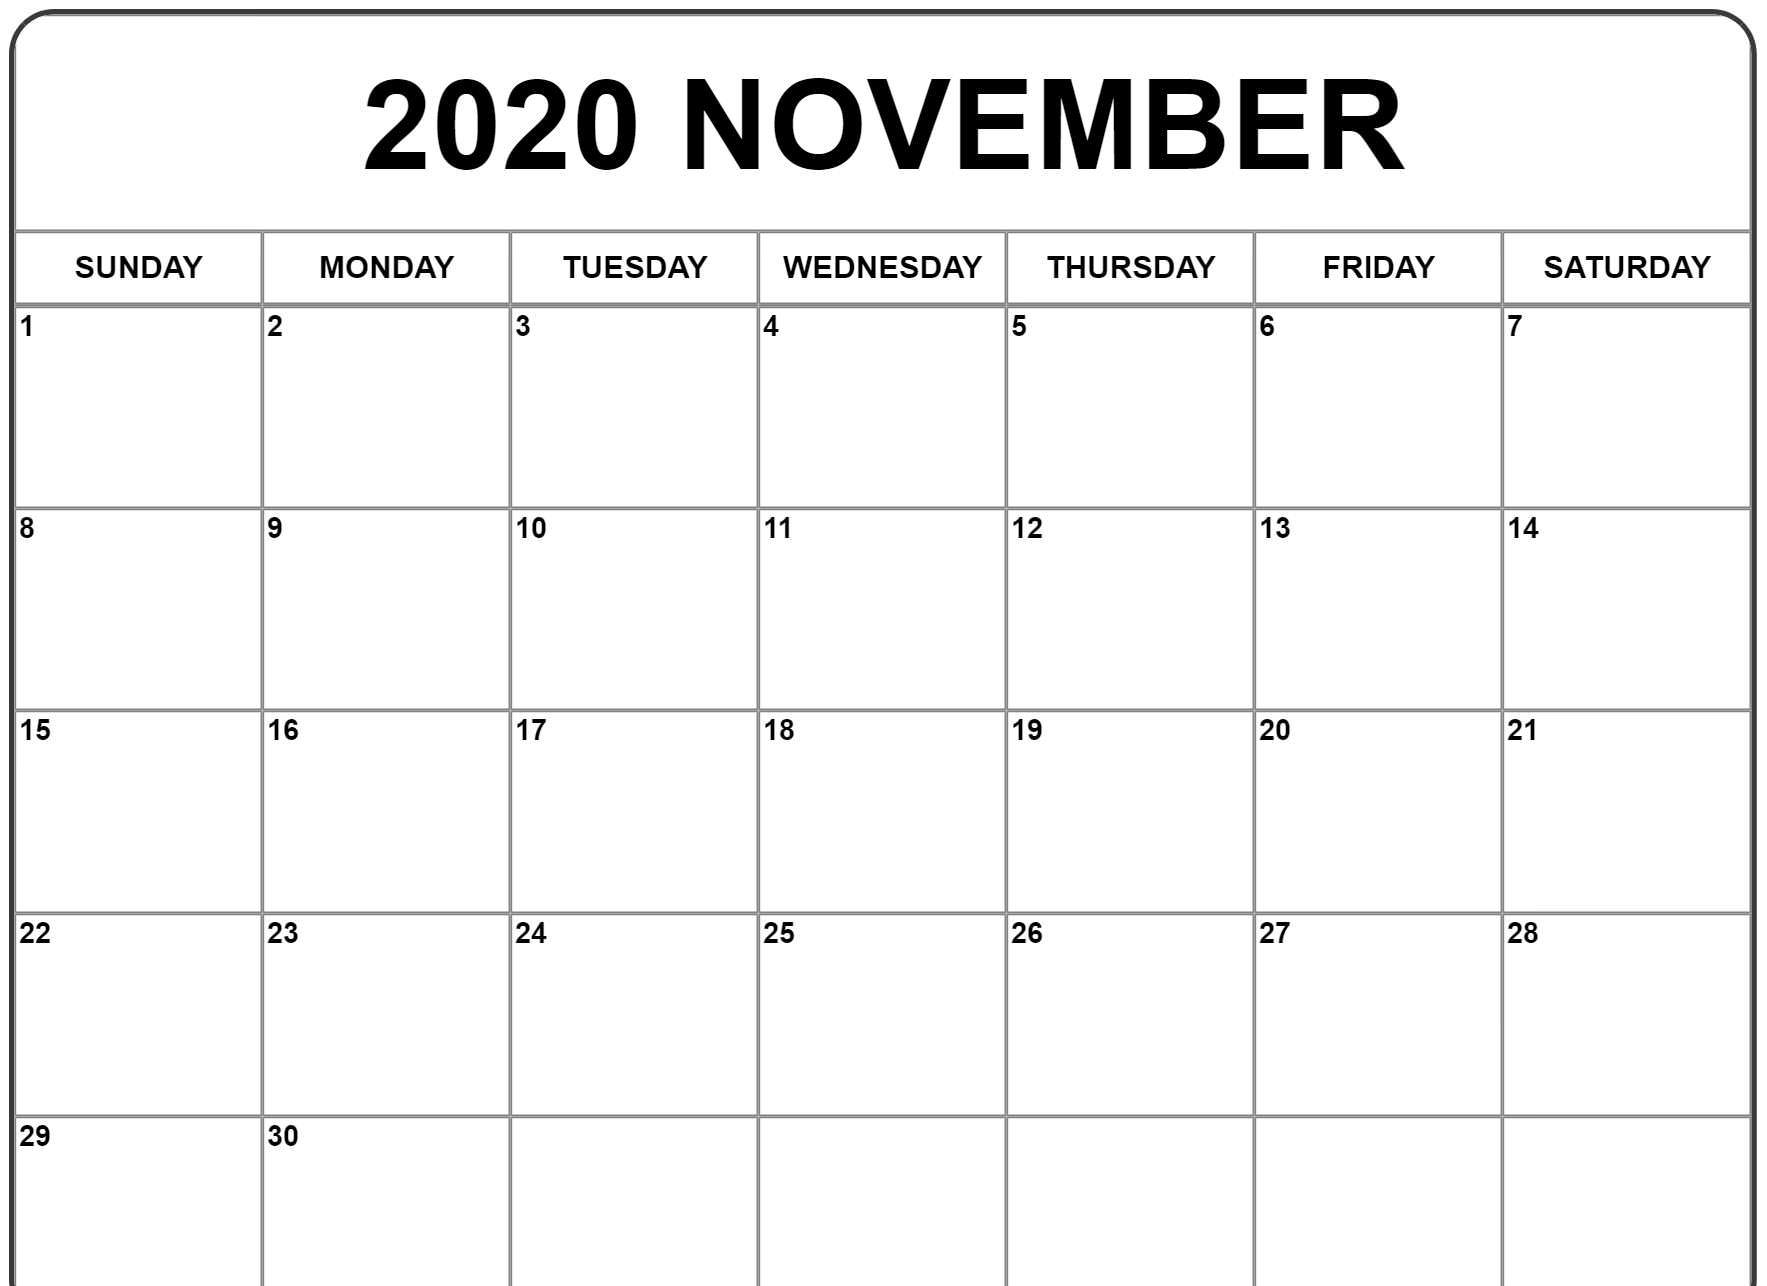 November 2020 Calendar